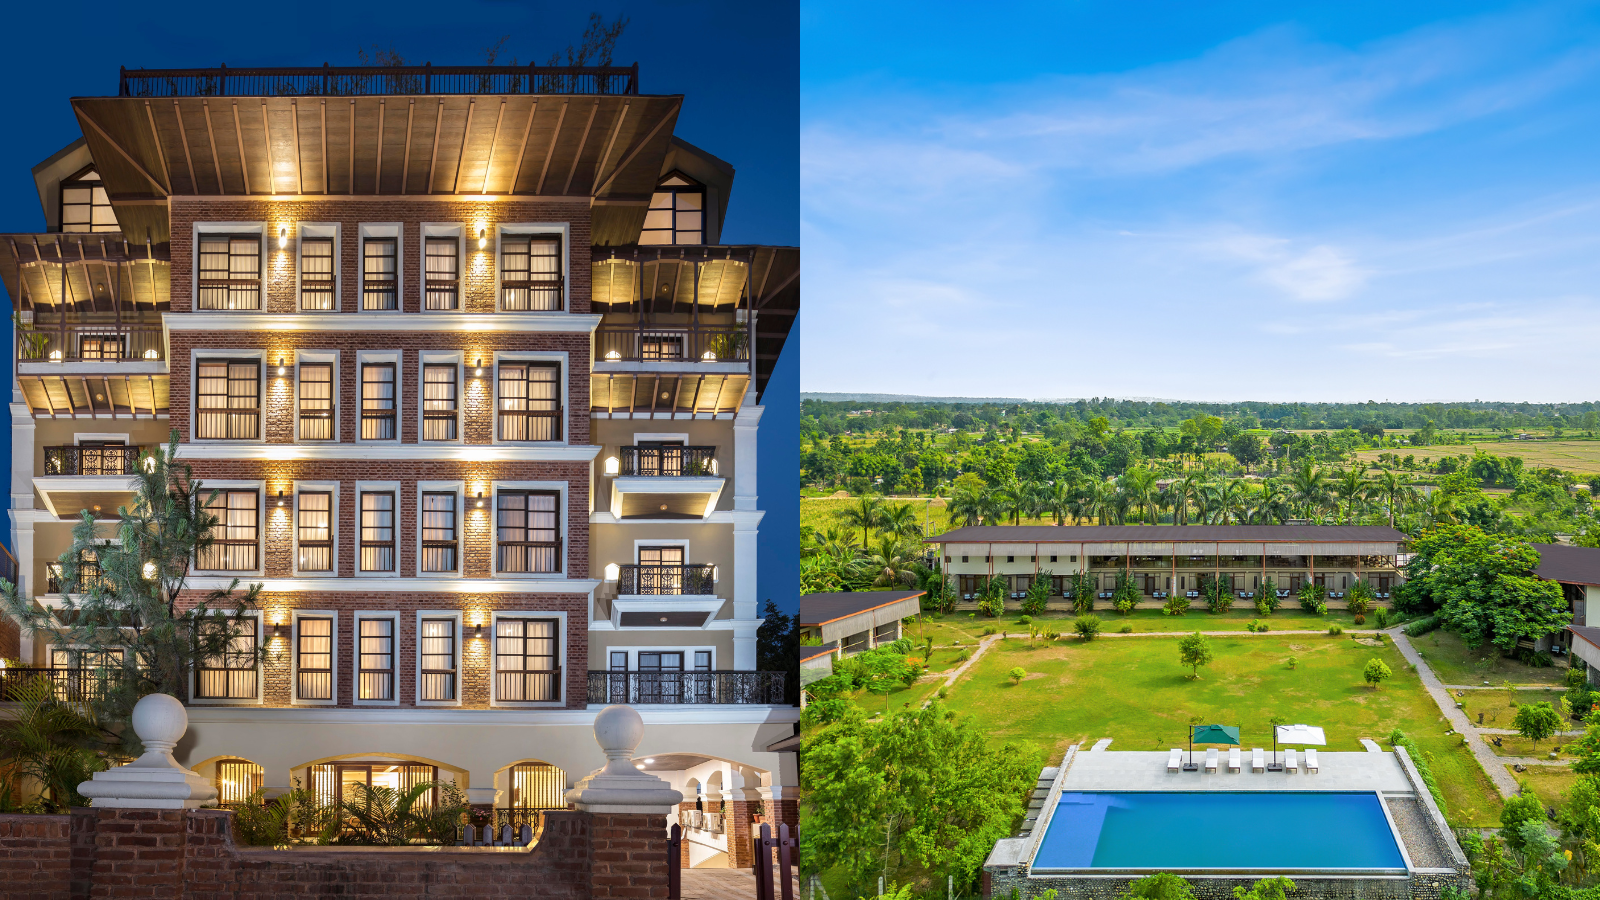 (Left) Nepali Ghar Hotel, Kathmandu / (Right) Sanctuary Resort, Chitwan